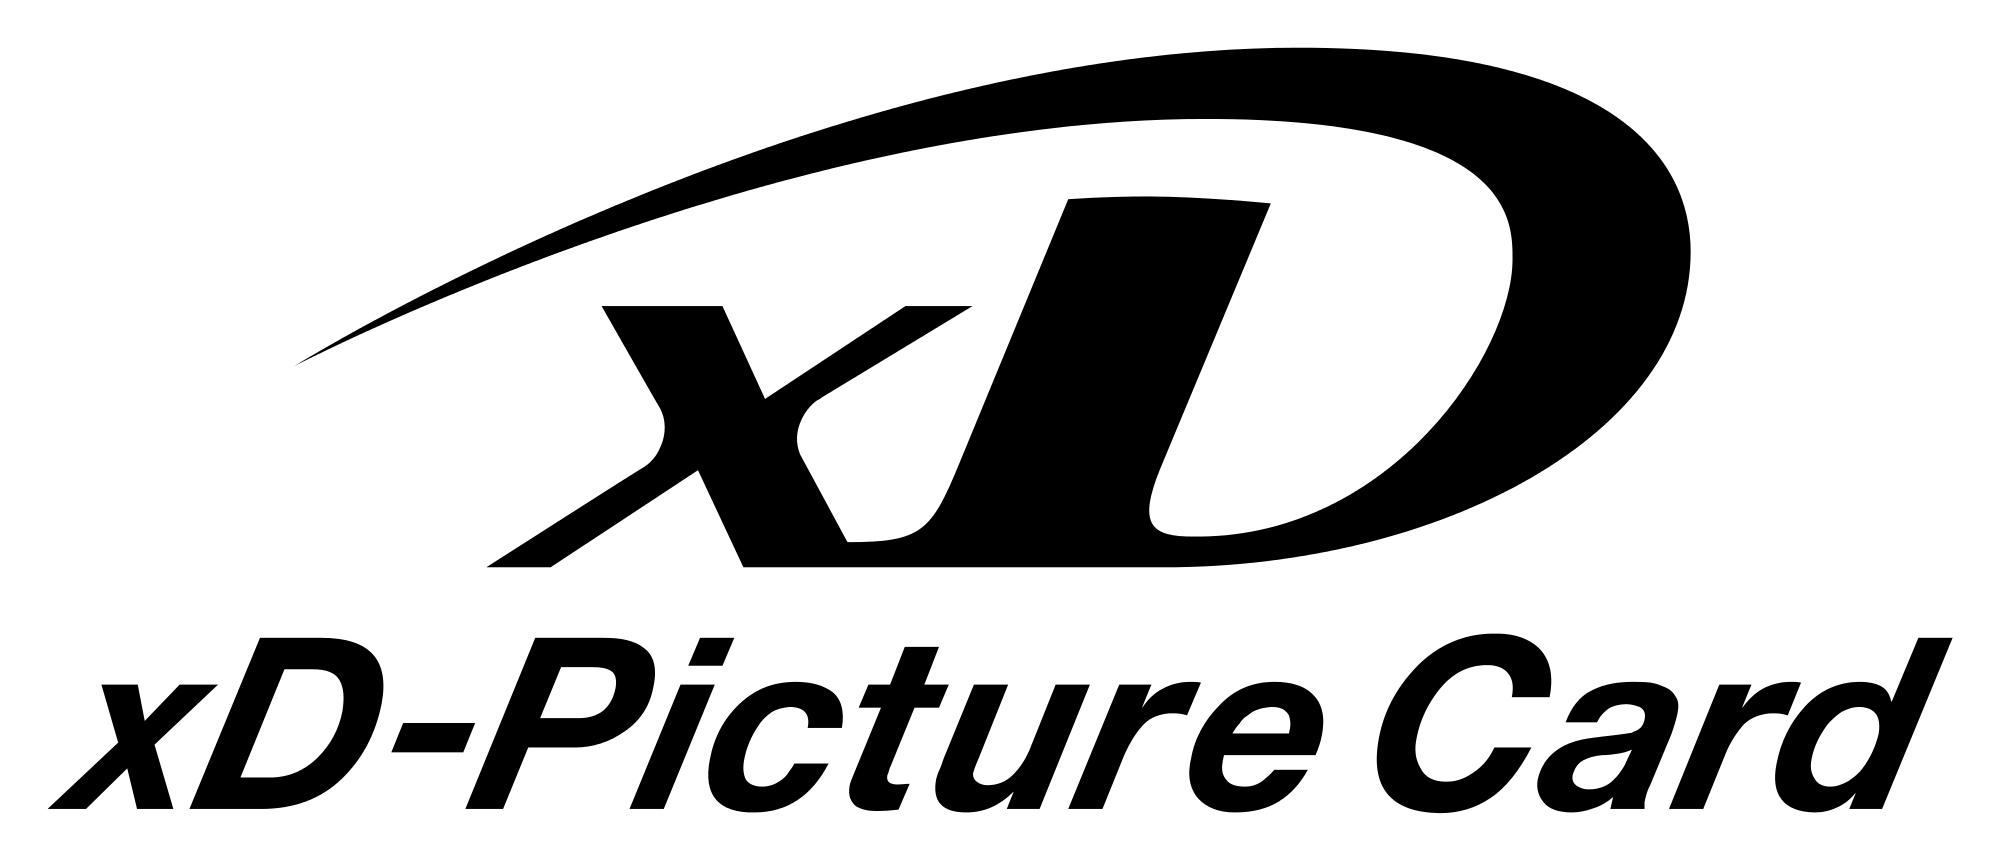 XD Logo - XD Picture Card Logo.svg